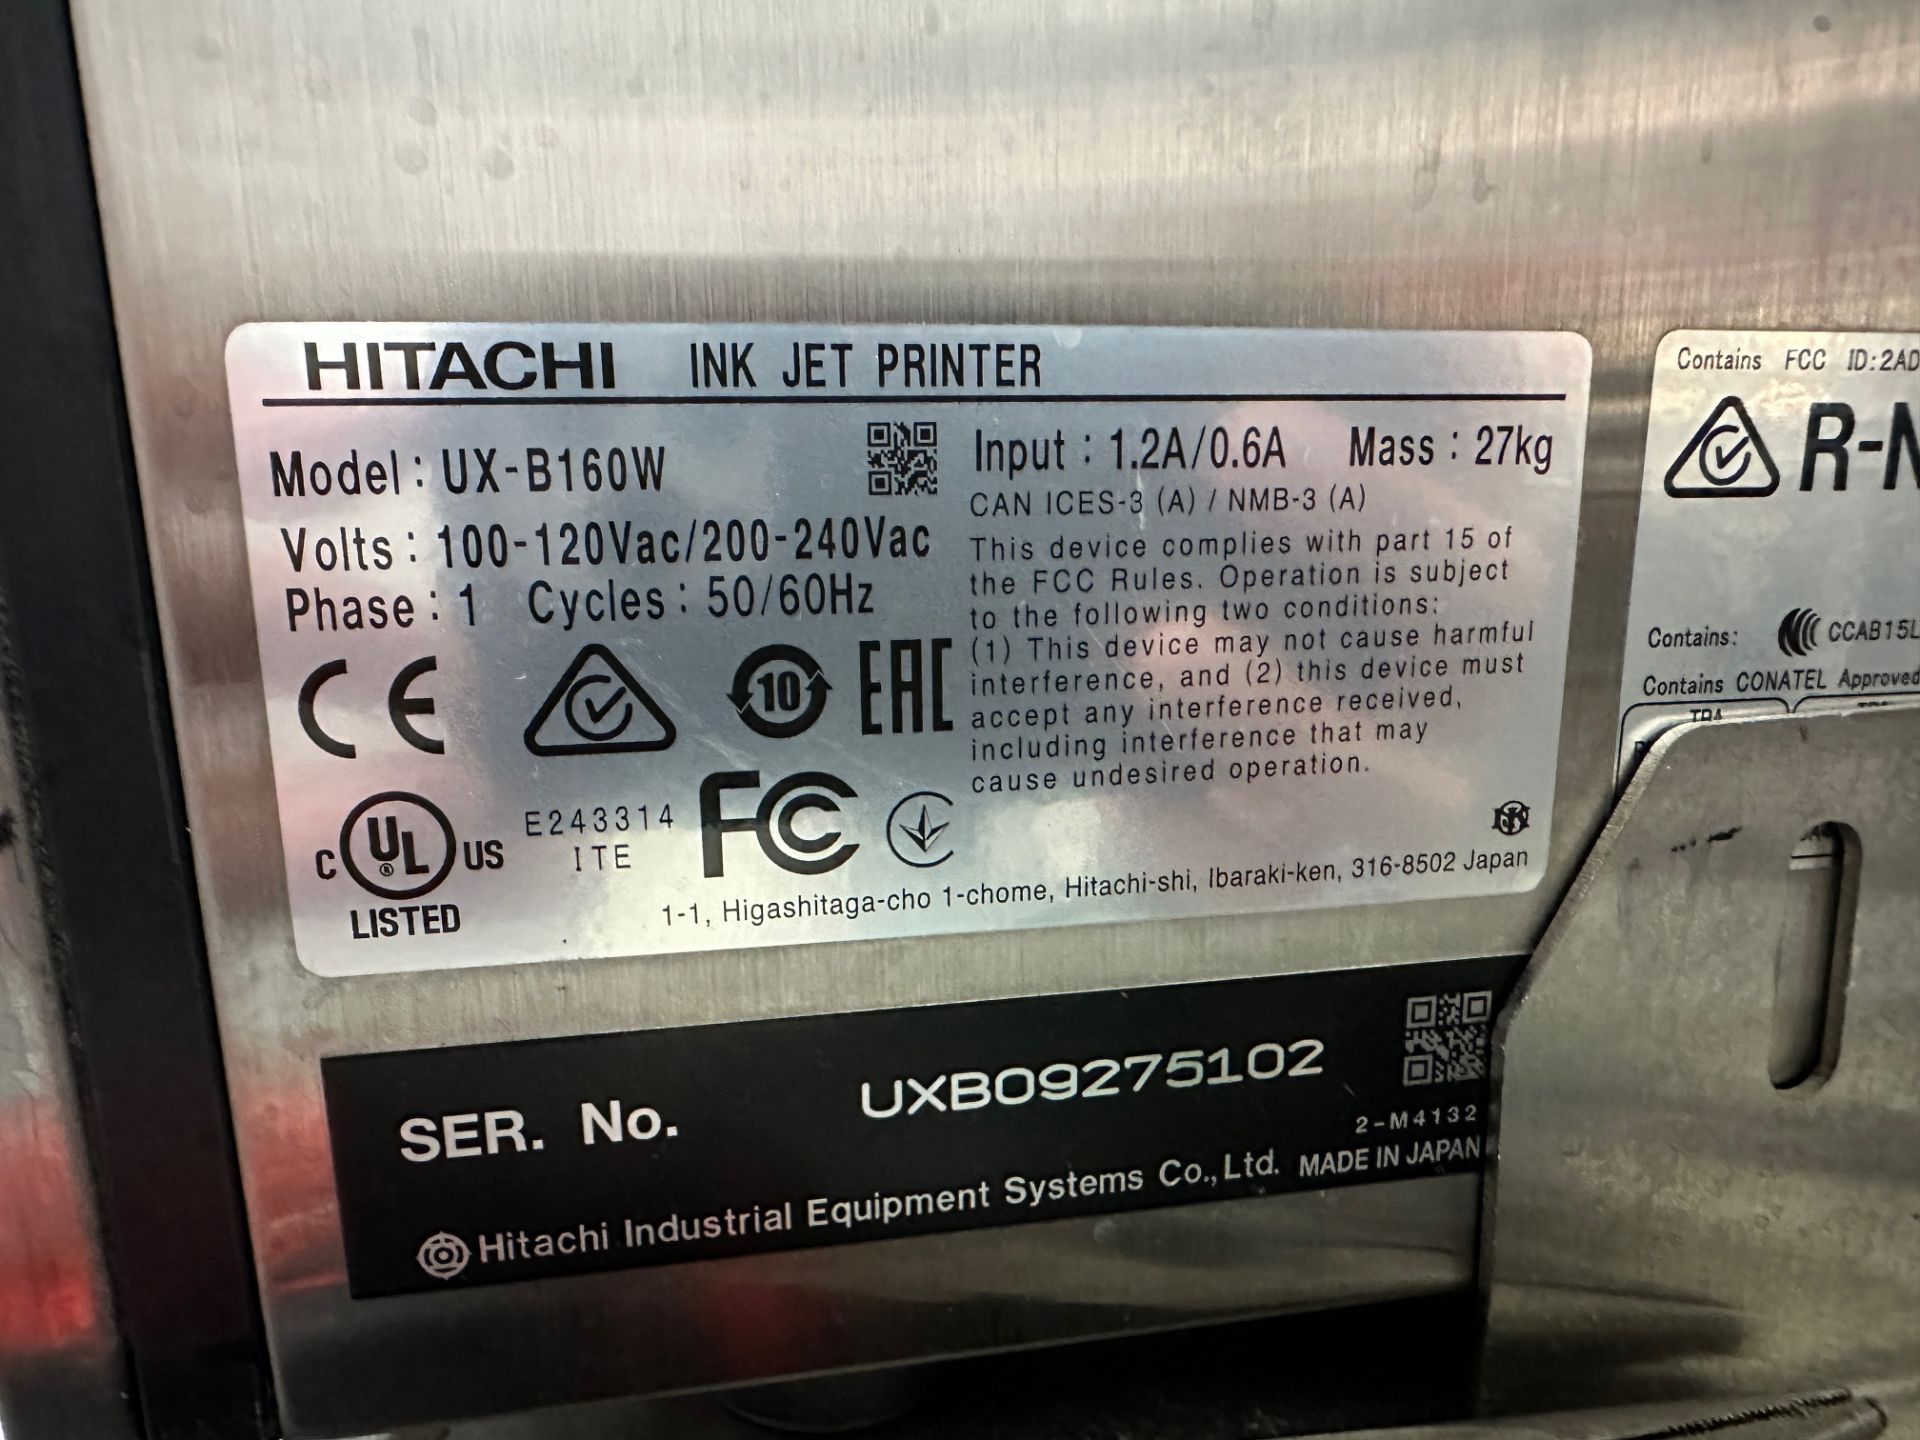 Hitachi UX-B160W Ink Jet Printer - S/N UXB09275102 | Rig Fee $150 - Image 3 of 3